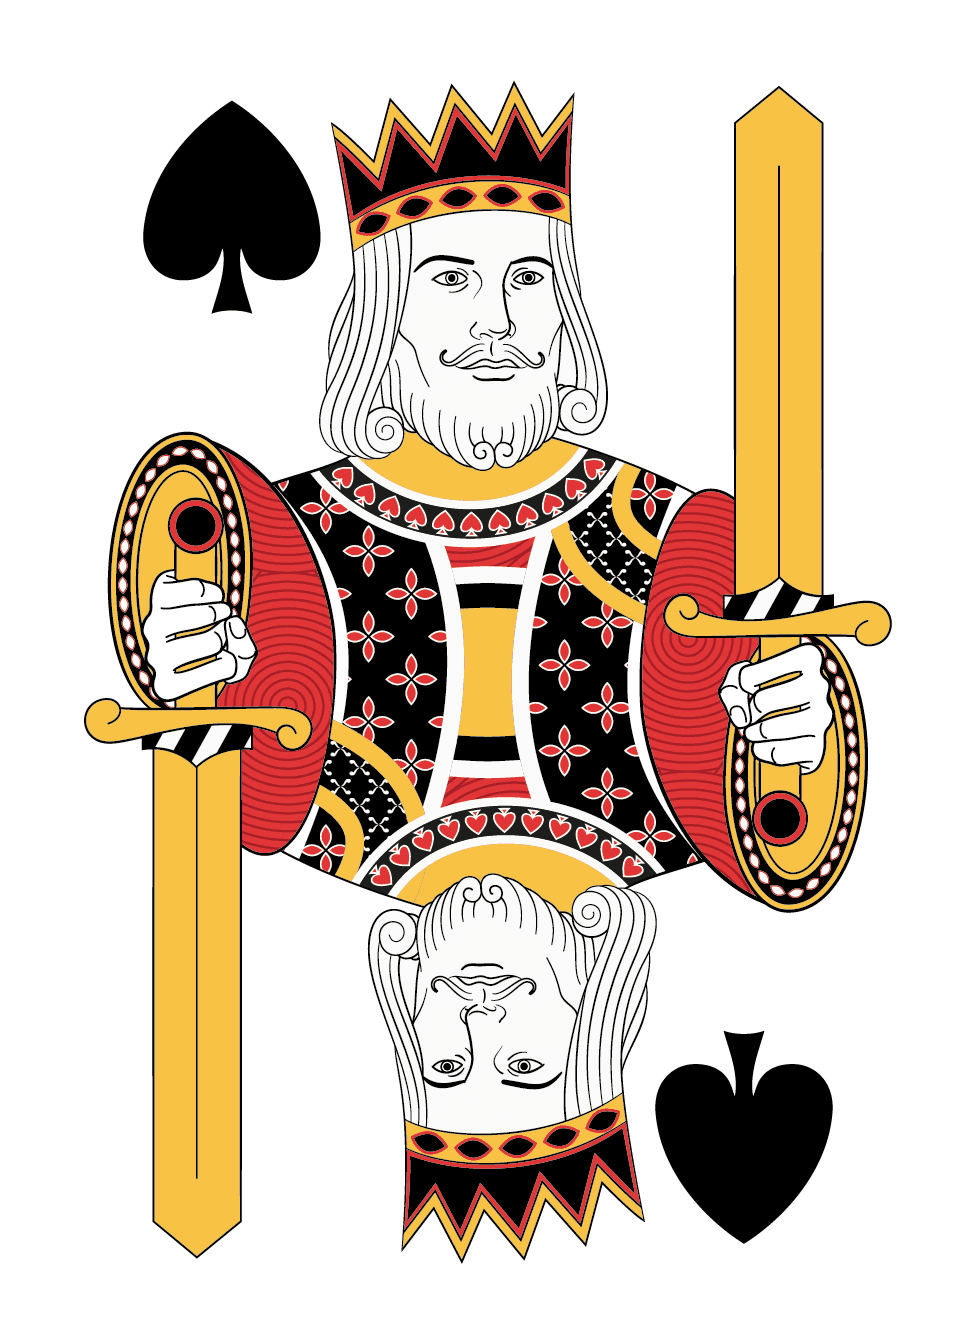 King of Spades - English